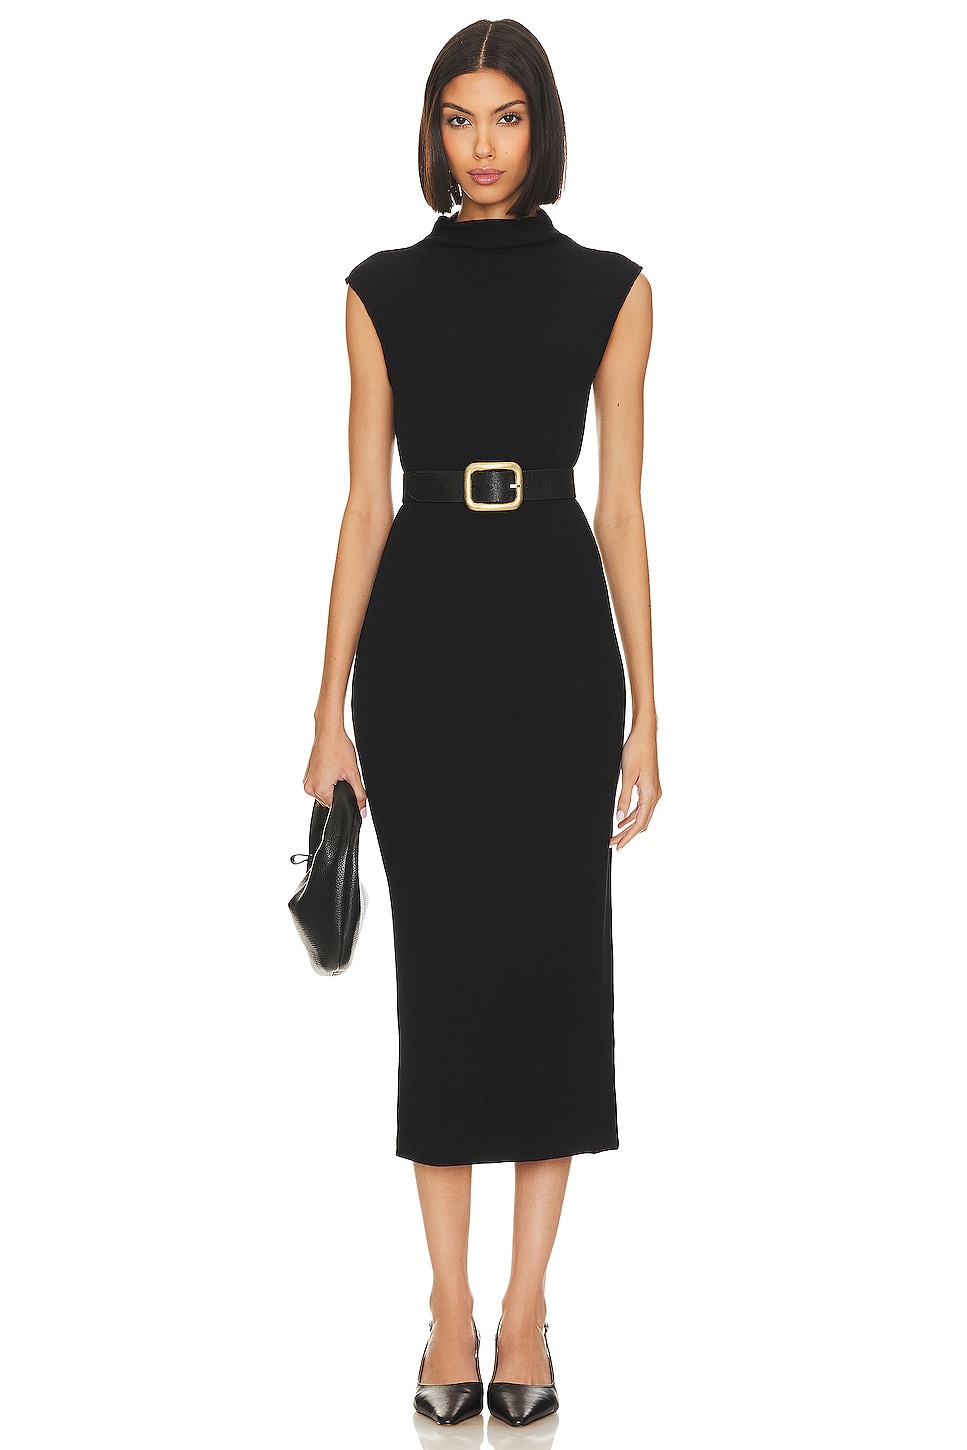 Enza Costa Sleeveless Knit Turtleneck Dress in Black | REVOLVE